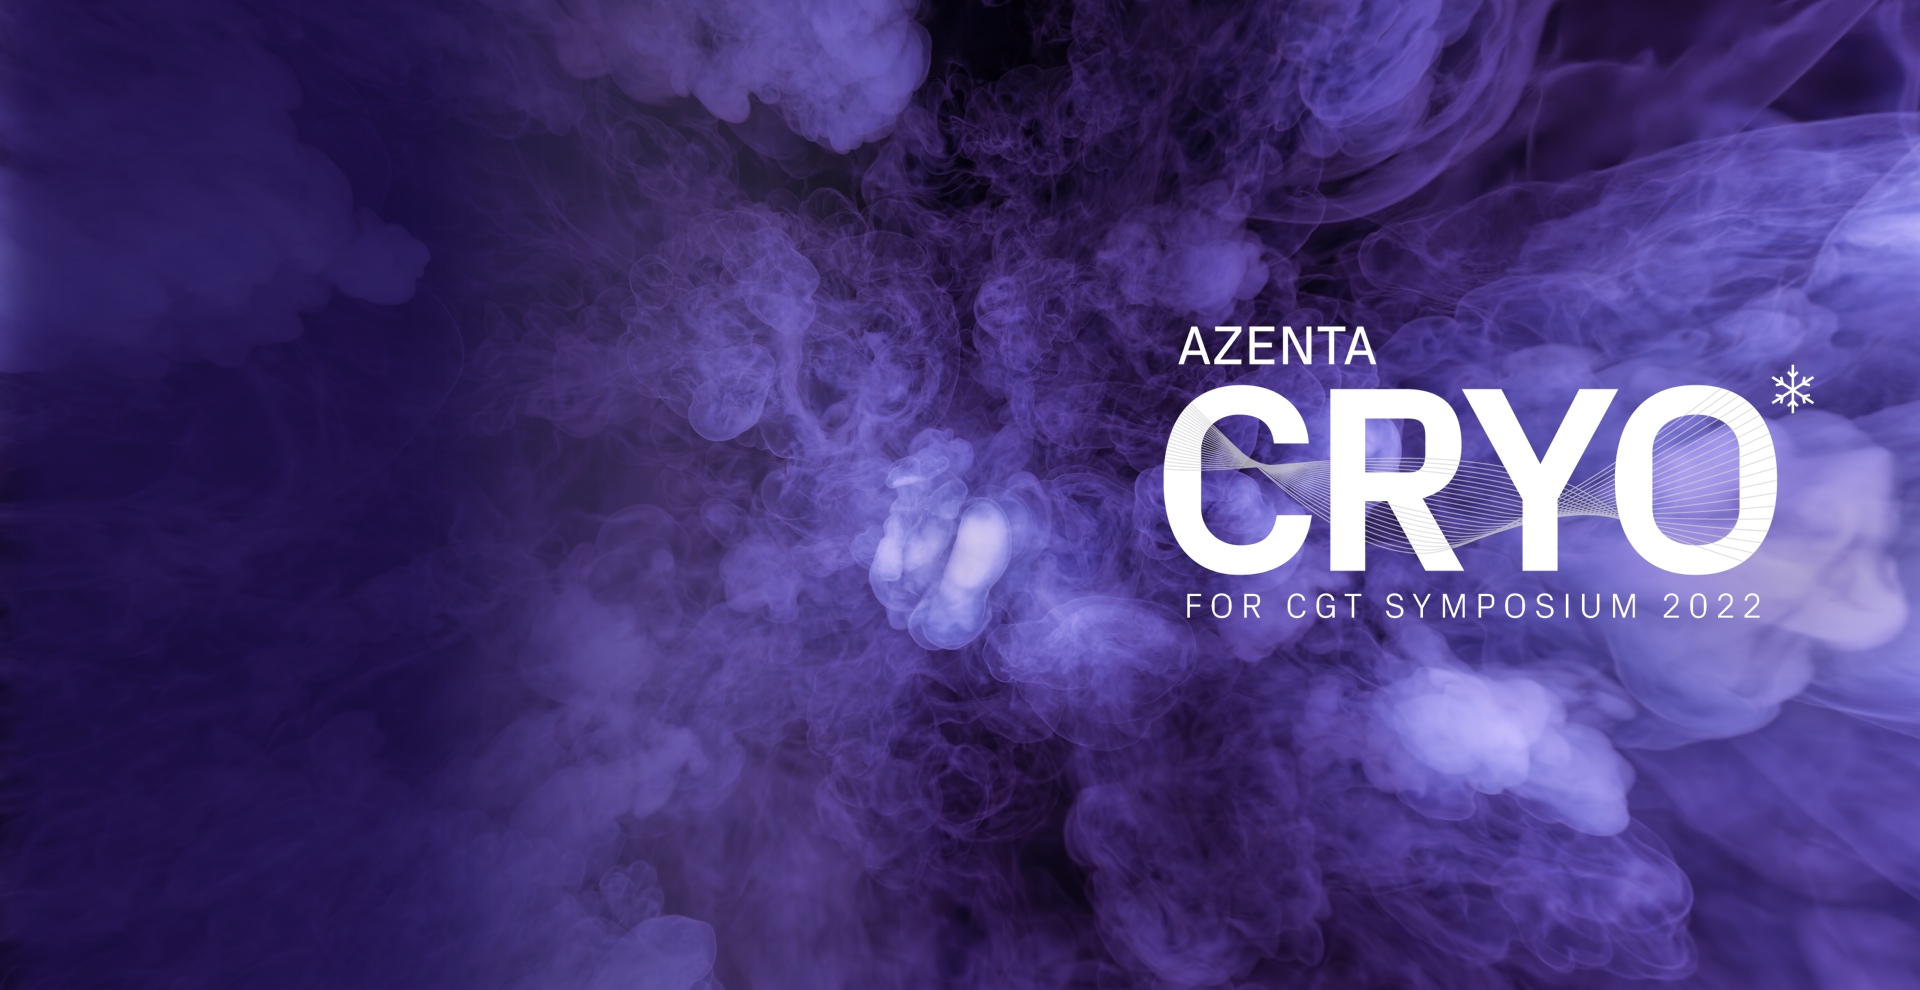 Azenta Cryo For CGT Symposium